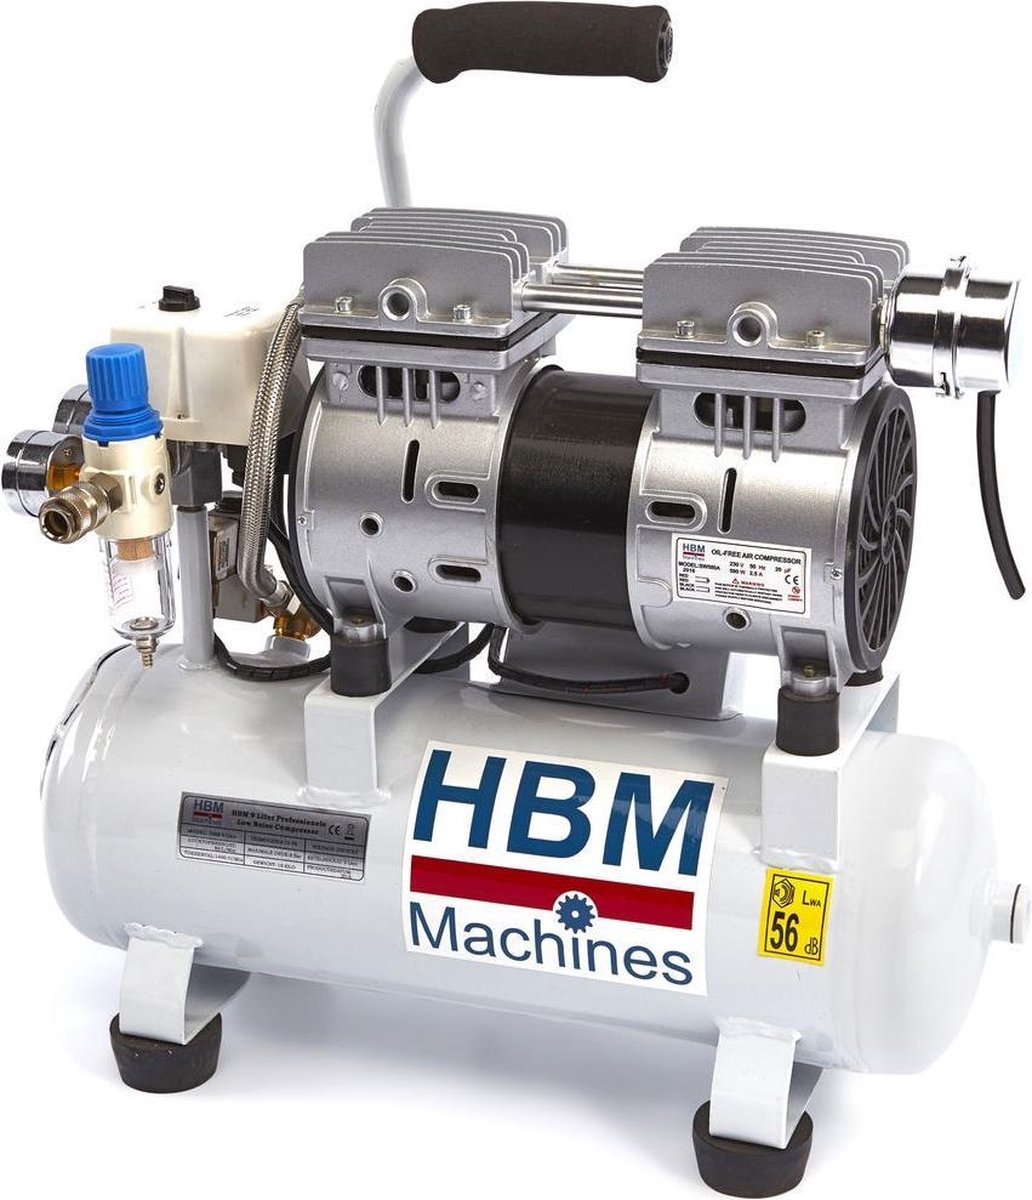 HBM 9 Liter Professionele Low Noise Compressor | bol.com